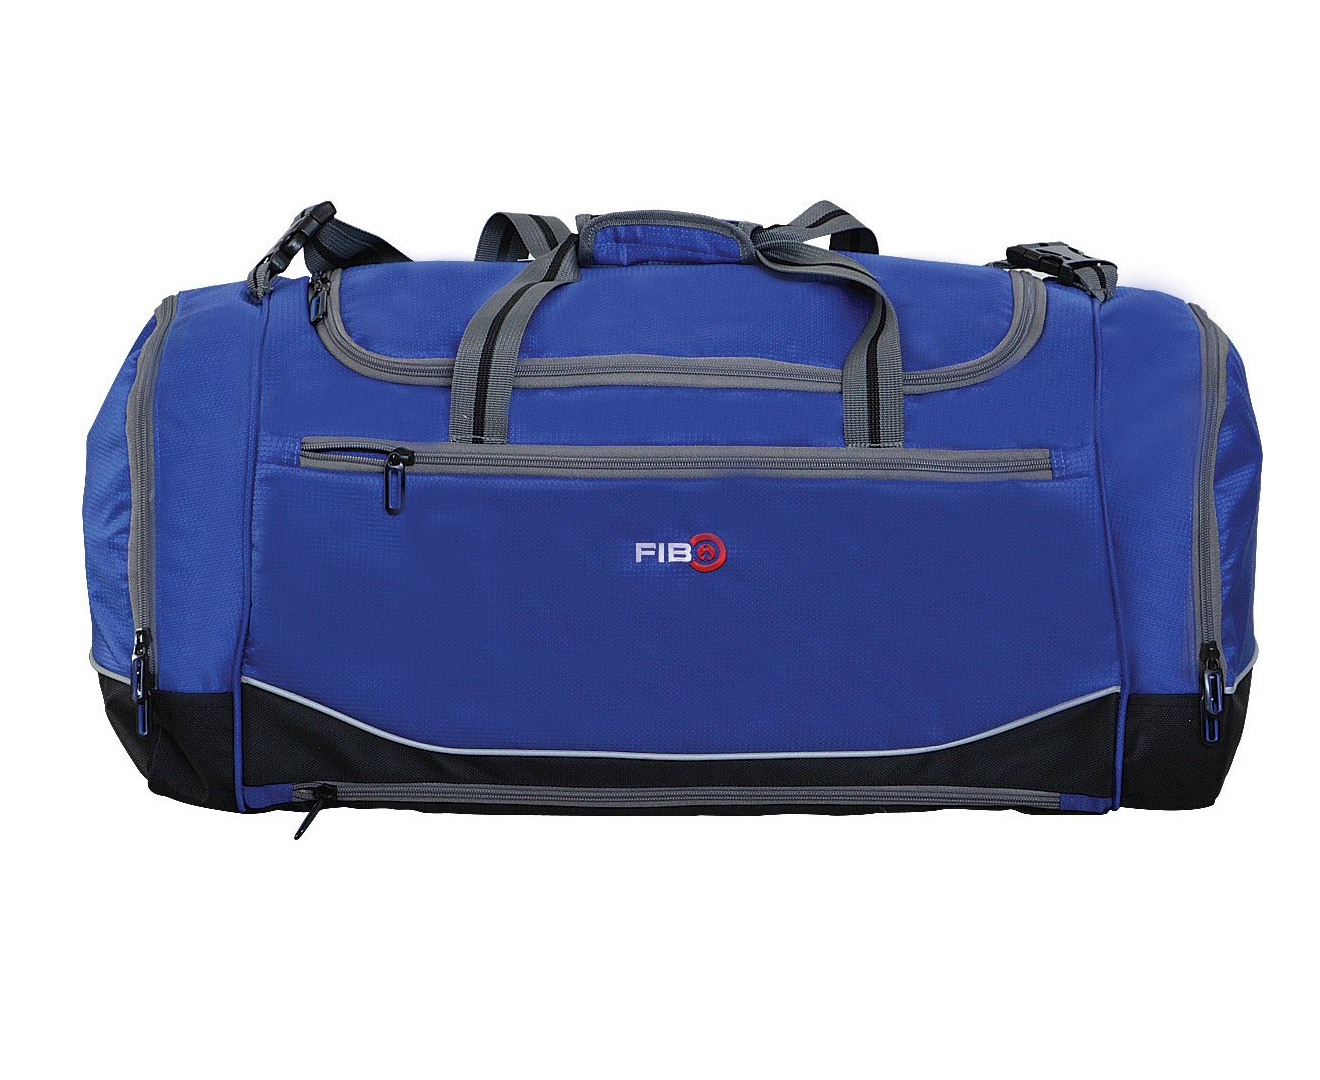 FIB 32&quot; Heavy Duty Travel Duffle Bag Tote Sports Gym w Shoulder Straps - Blue